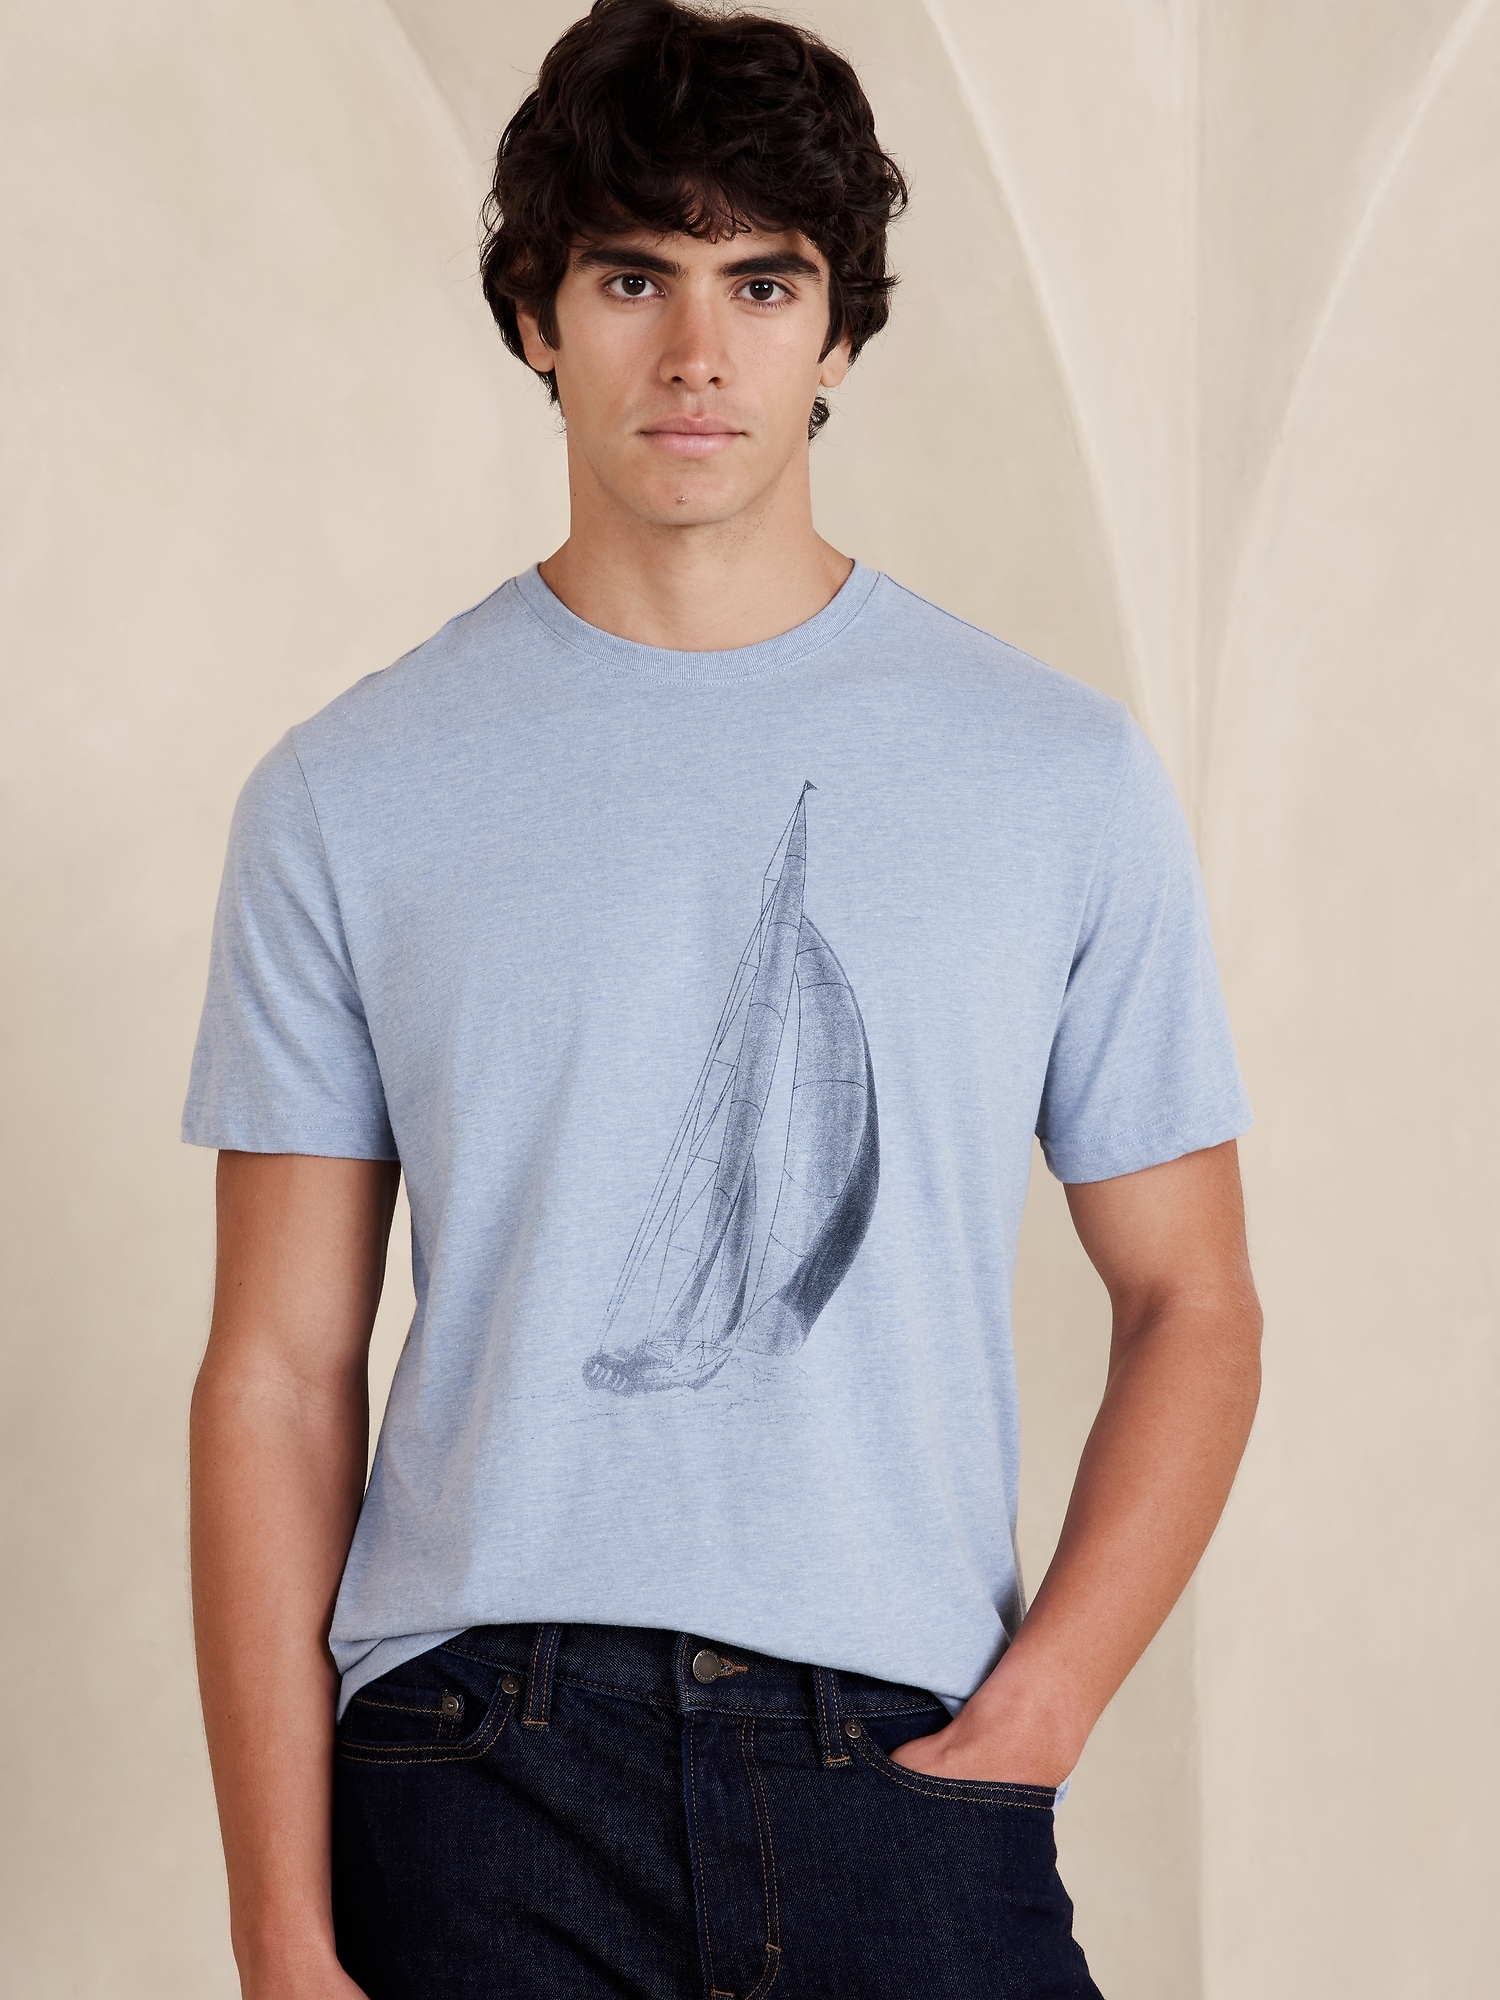 Boat Sails Graphic T-Shirt